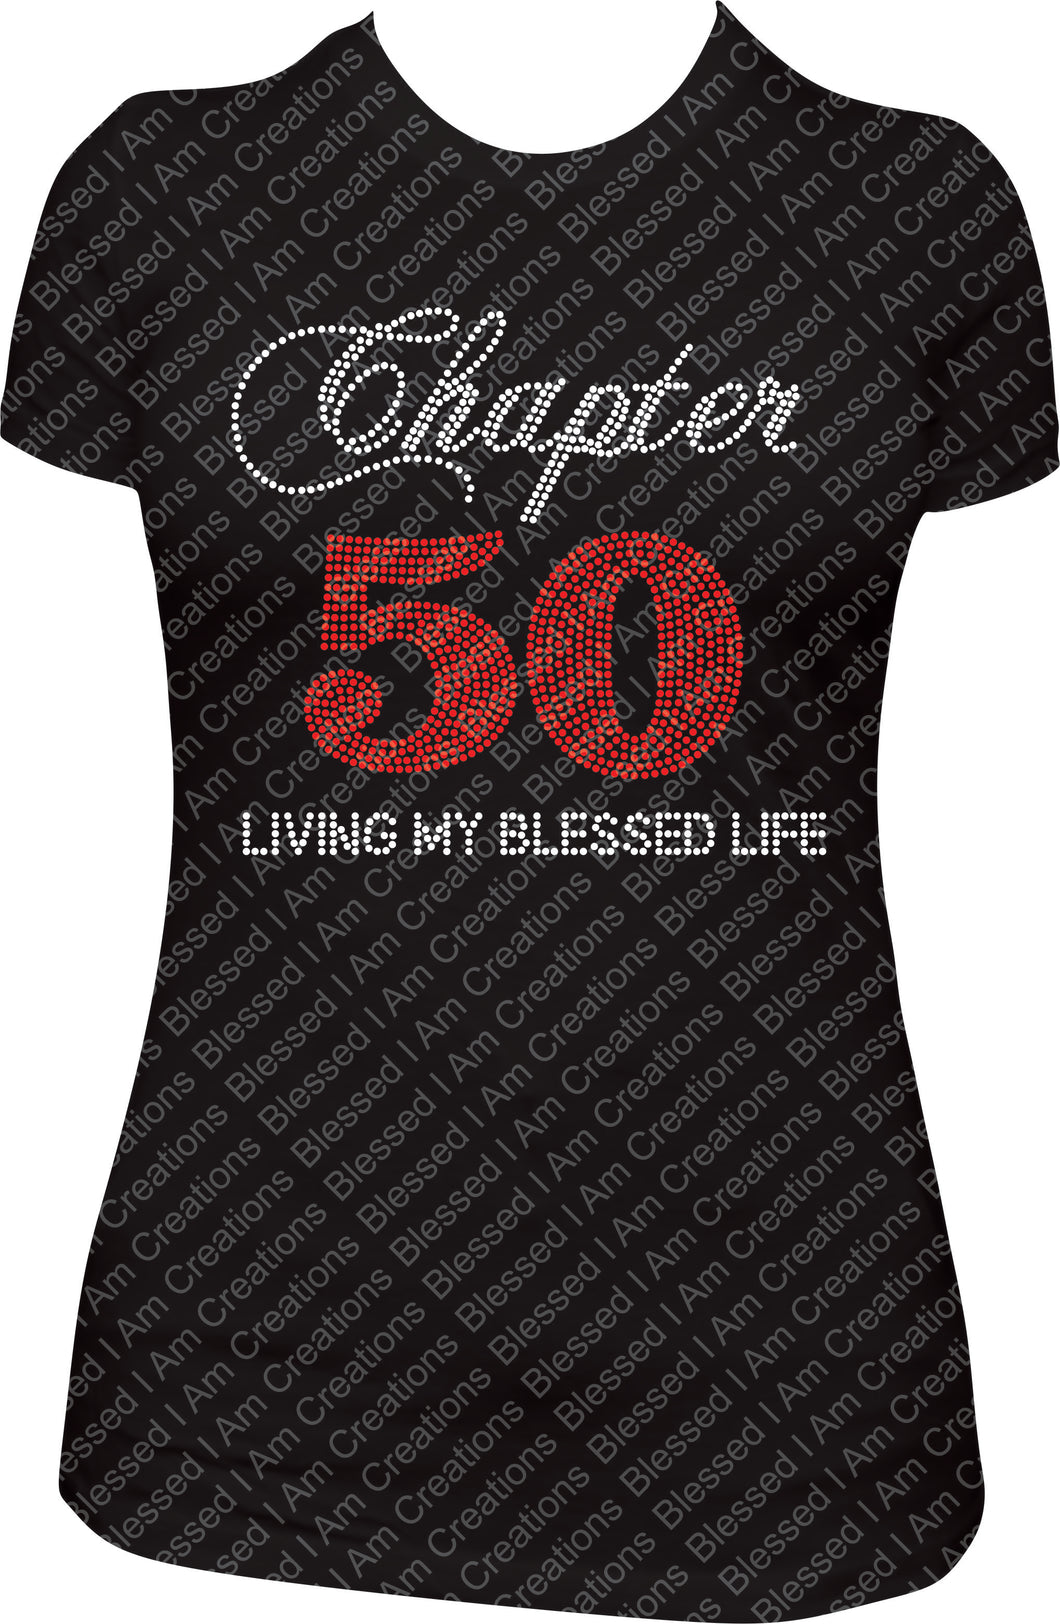 Chapter 50 Rhinestone Shirt, 50th Birthday Shirt, bling Birthday Shirt, Living My Blessed Life Shirt,